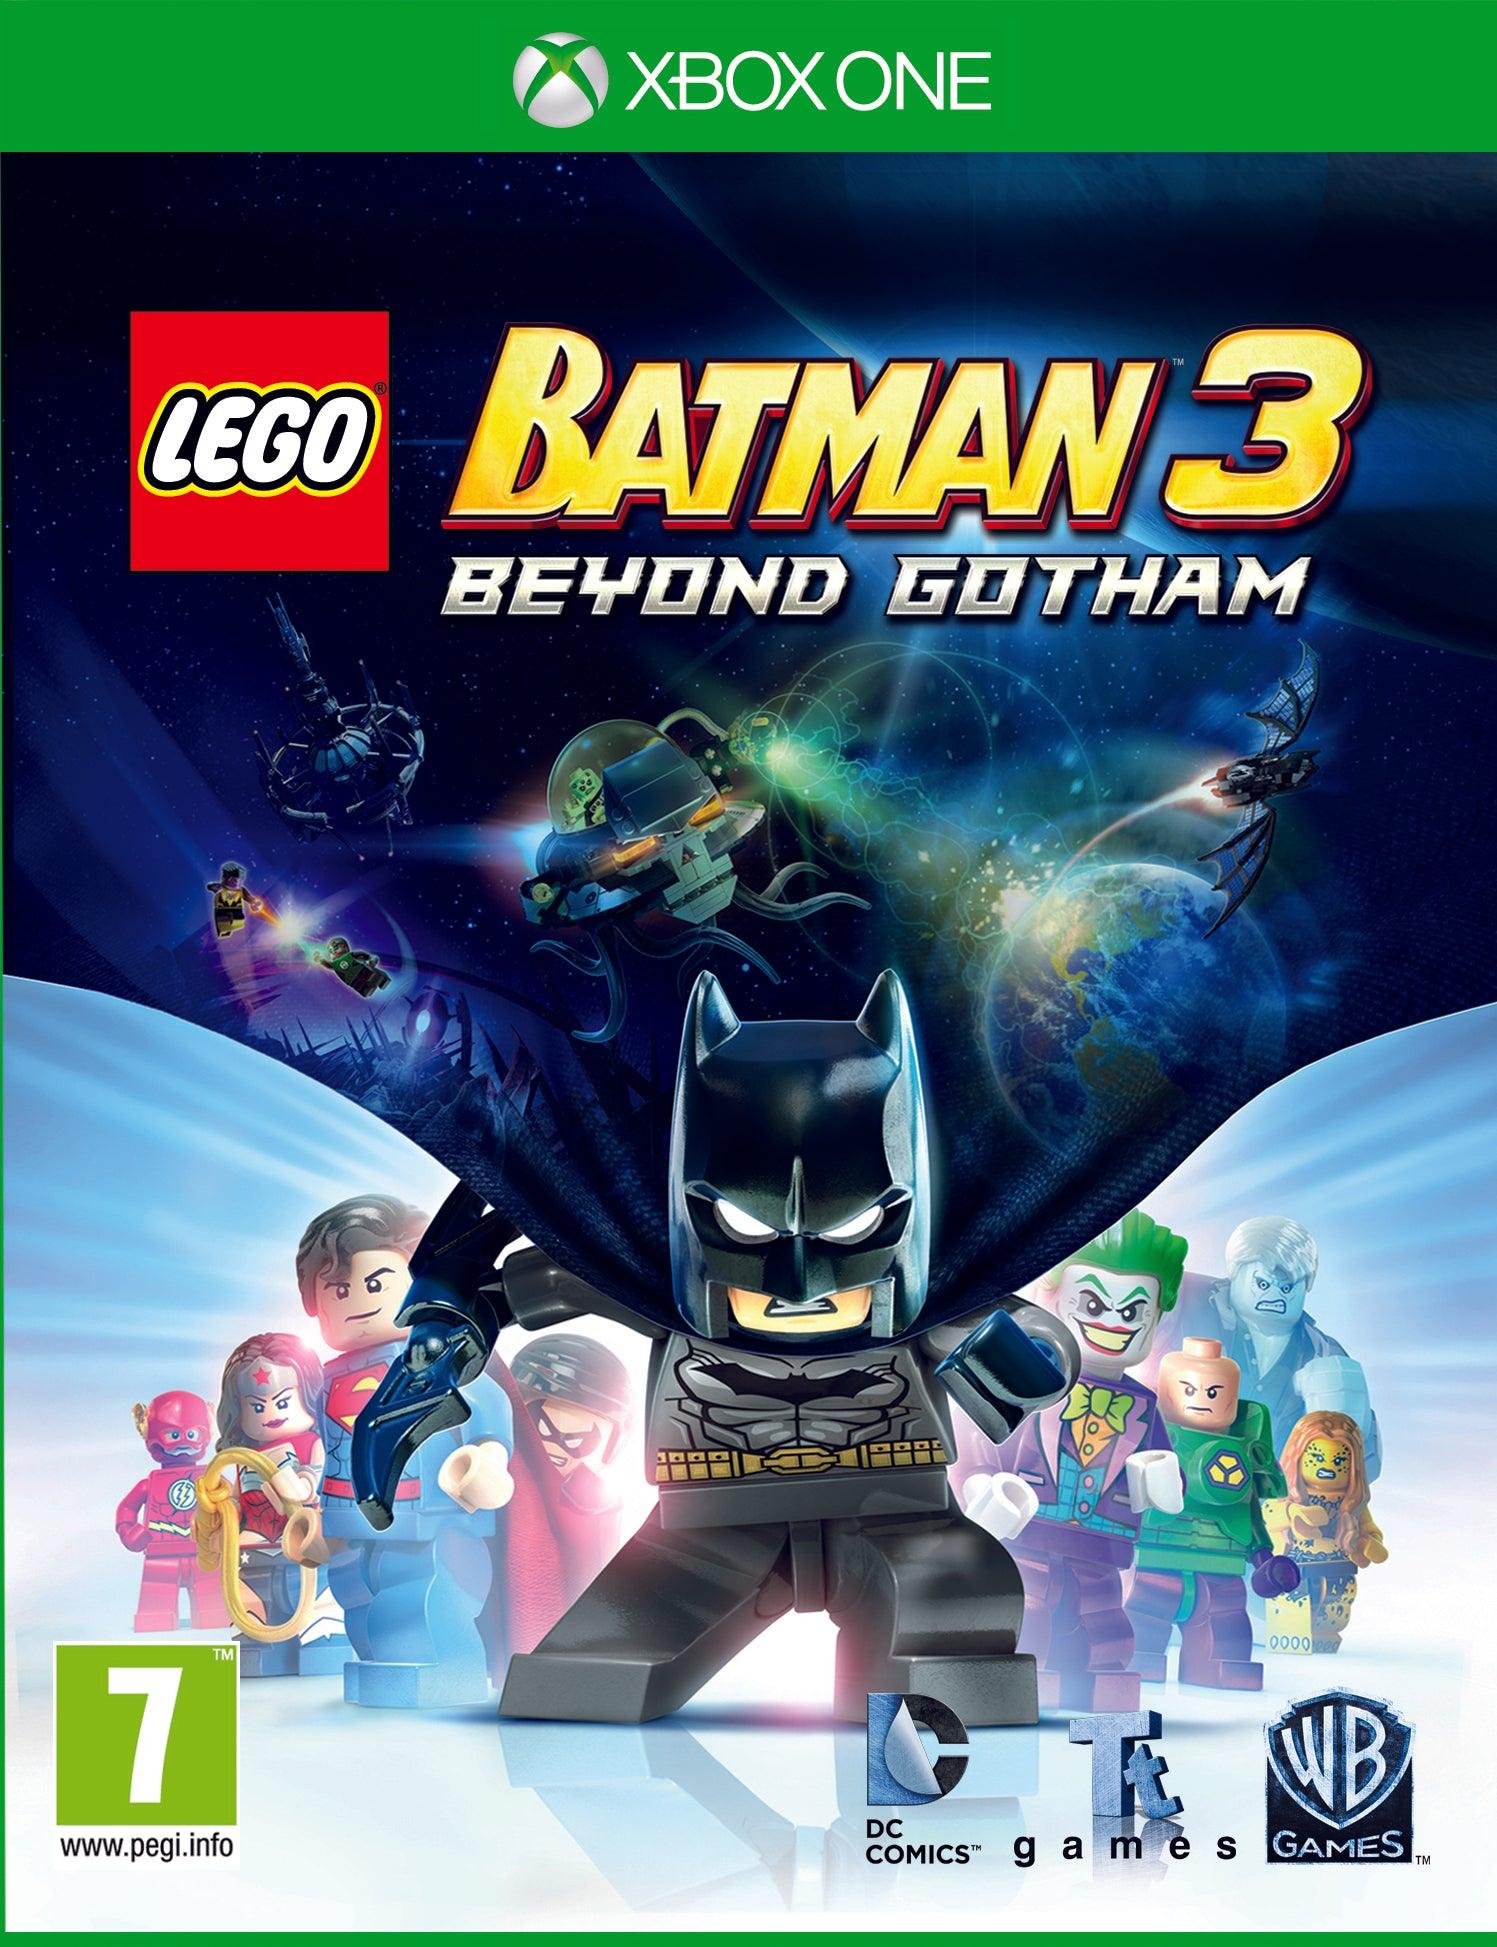 Lego Batman 3 Beyond Gotham - Want a New Gadget